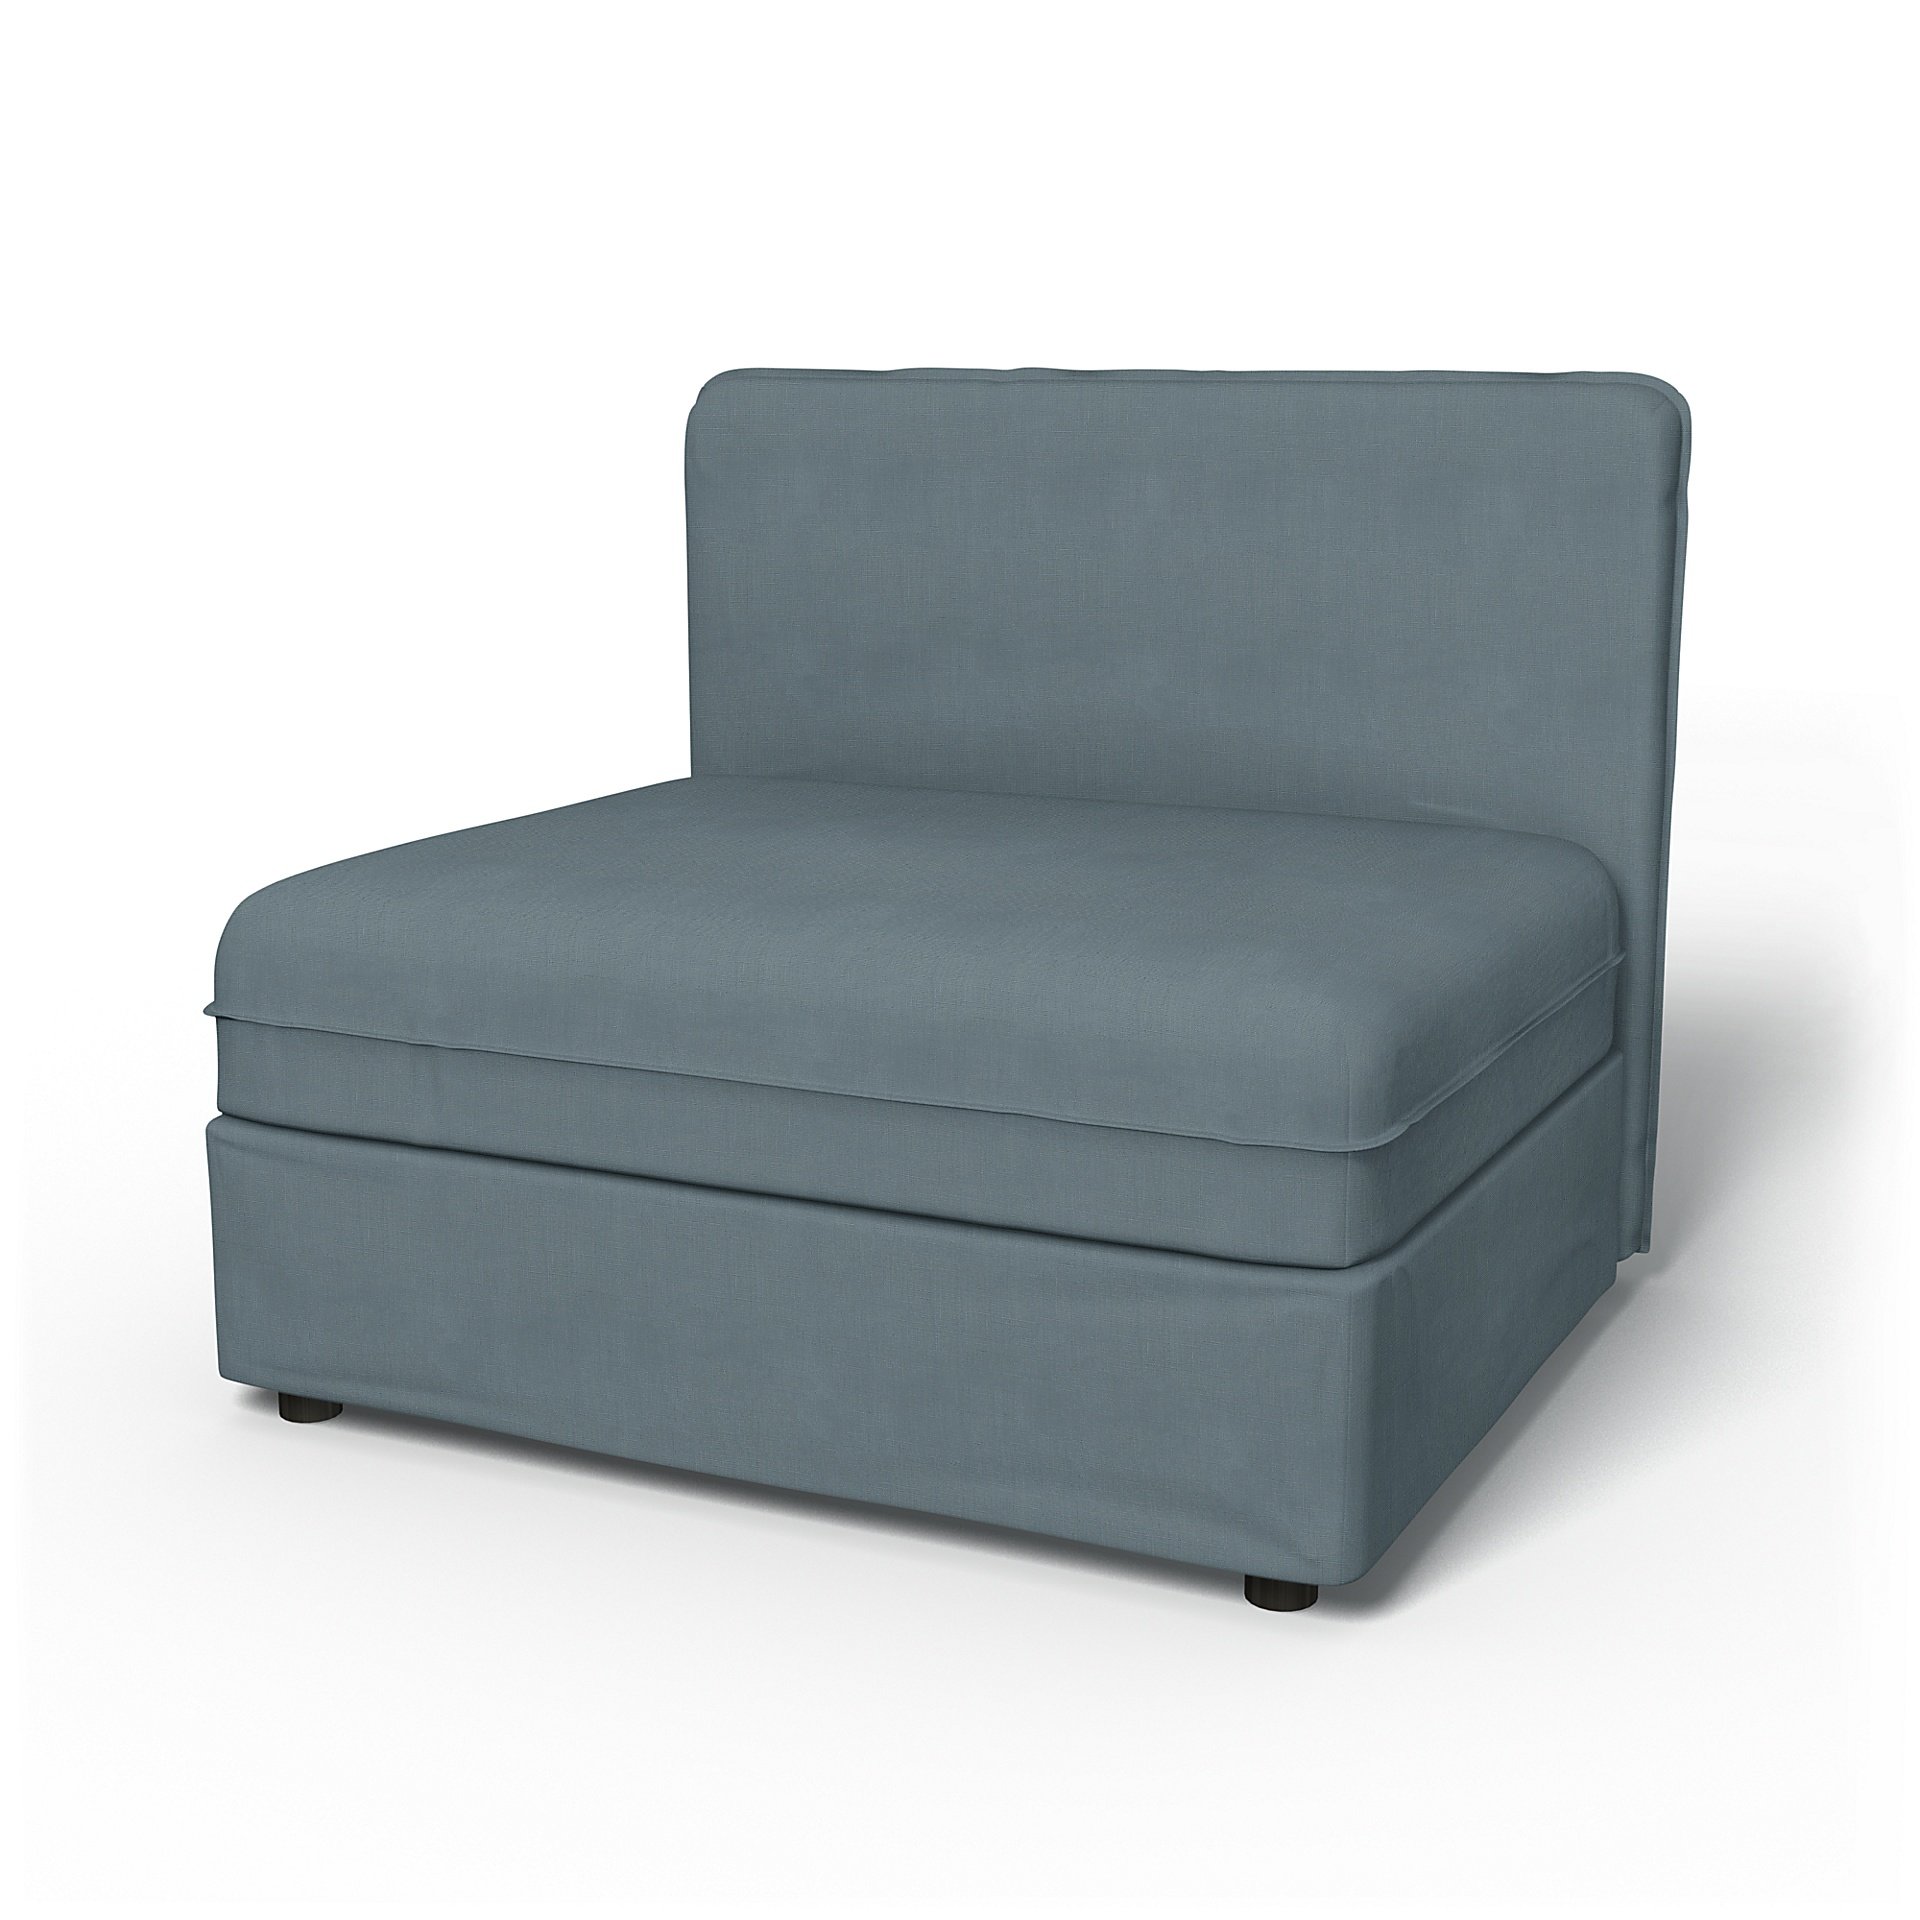 IKEA - Vallentuna Seat Module with Low Back Cover 100x80cm 39x32in, Dusk, Linen - Bemz